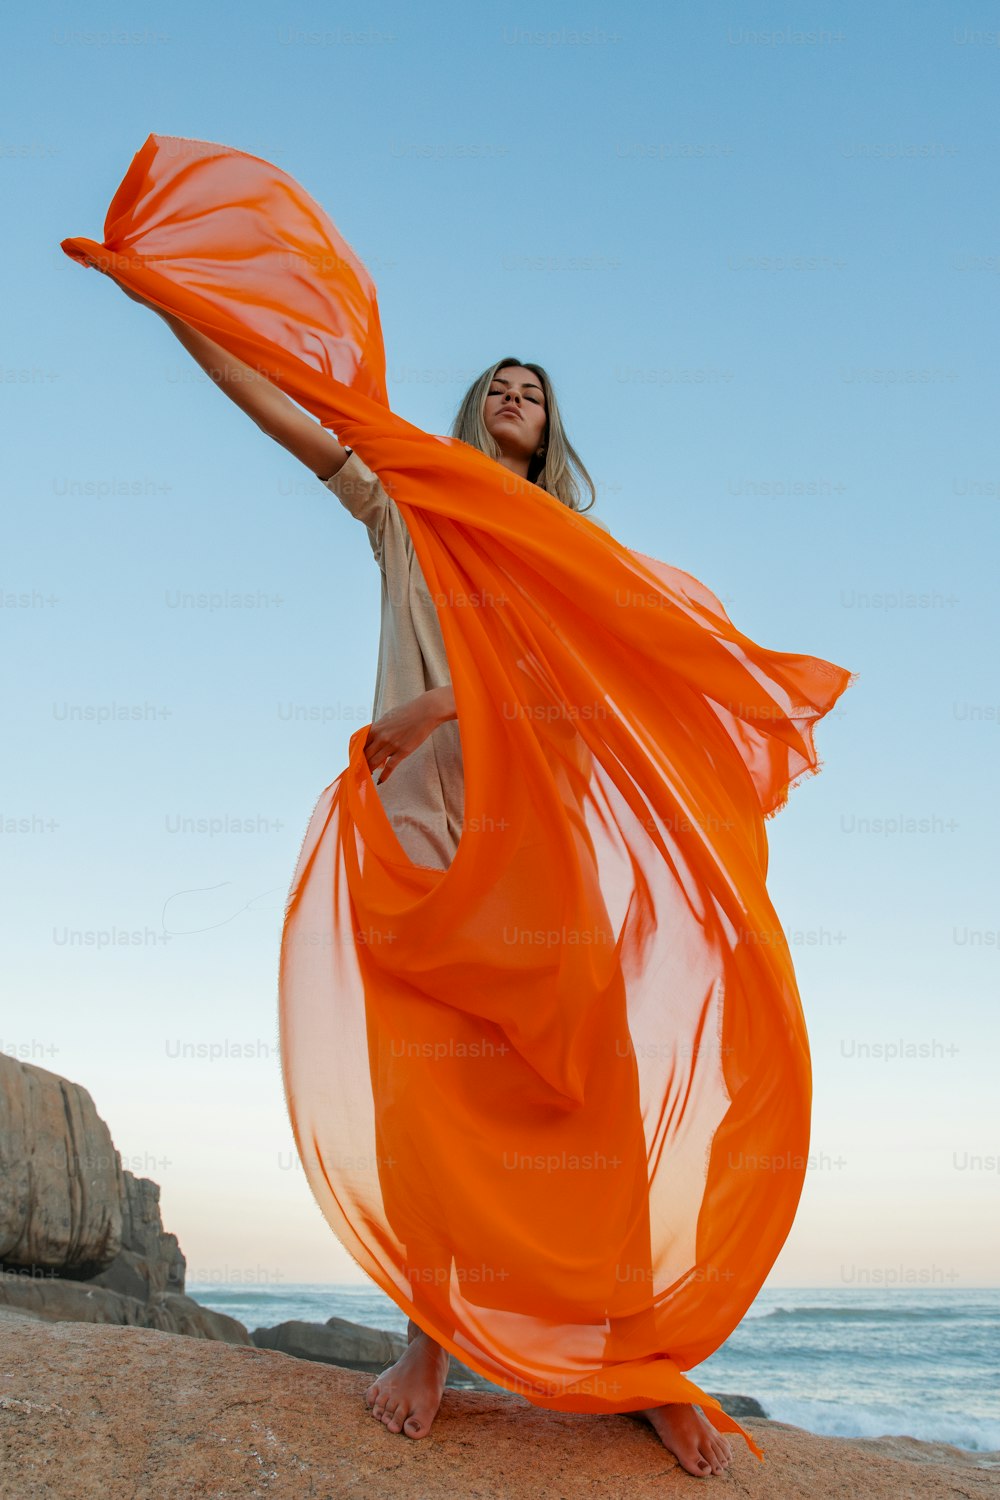 a woman in an orange dress standing on a beach